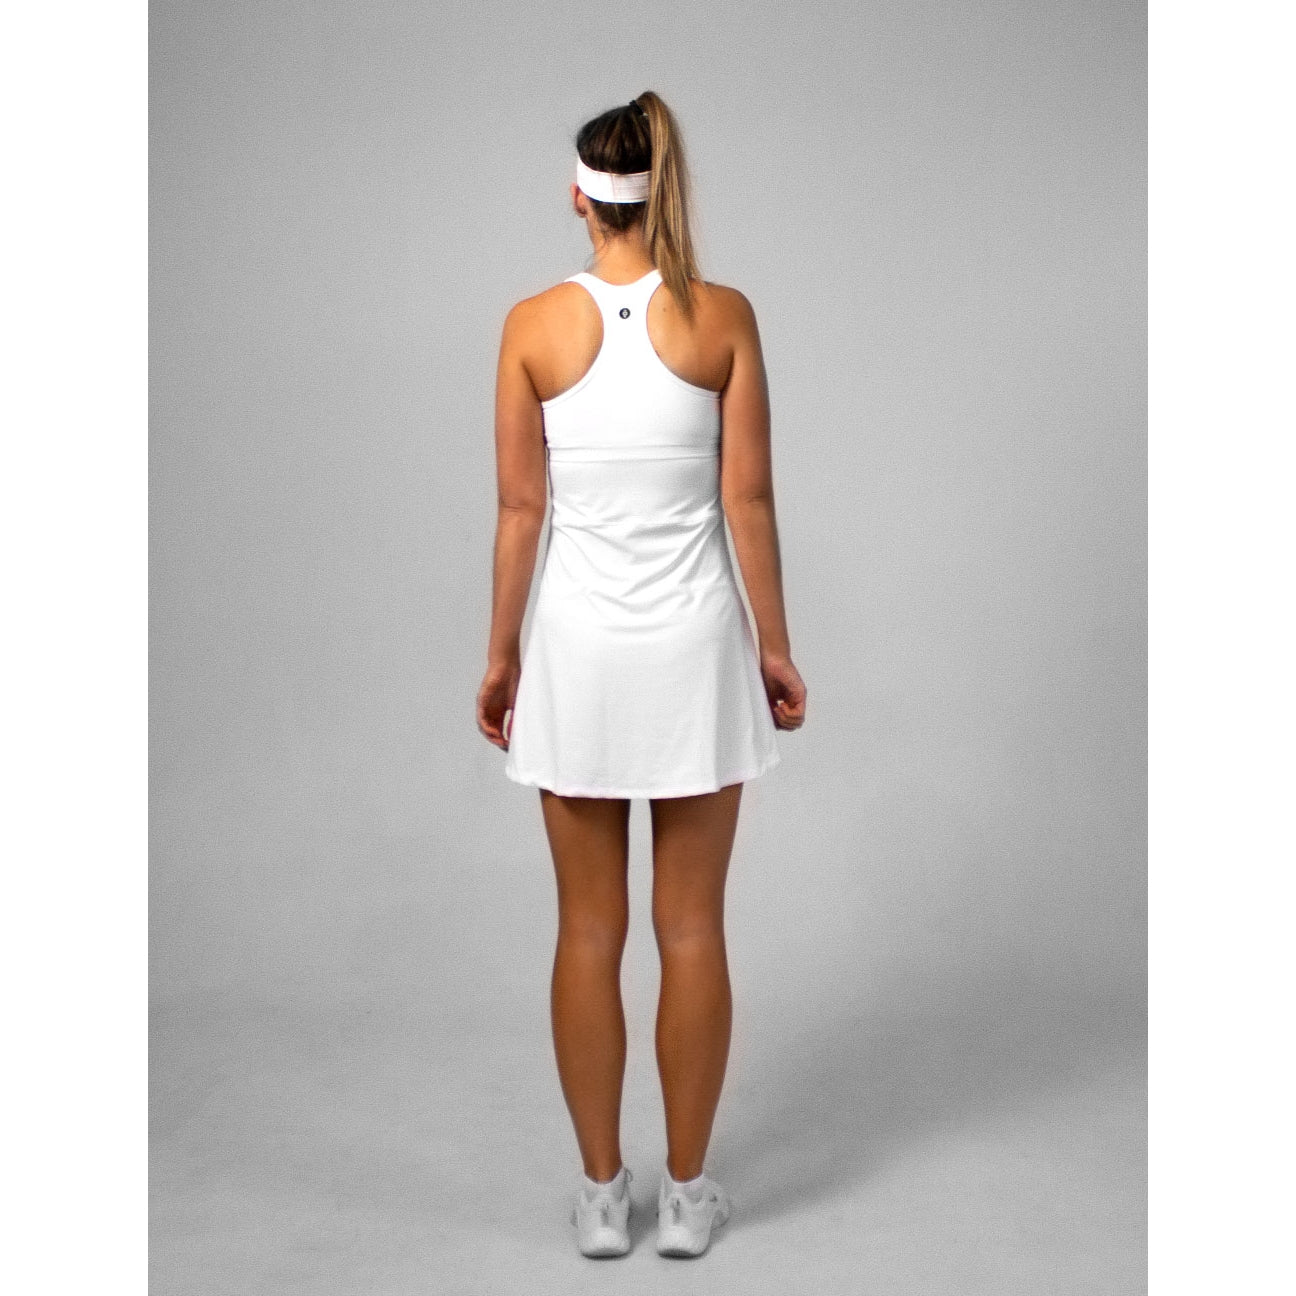 TONIC Ace Tennis Dress - White / Silver